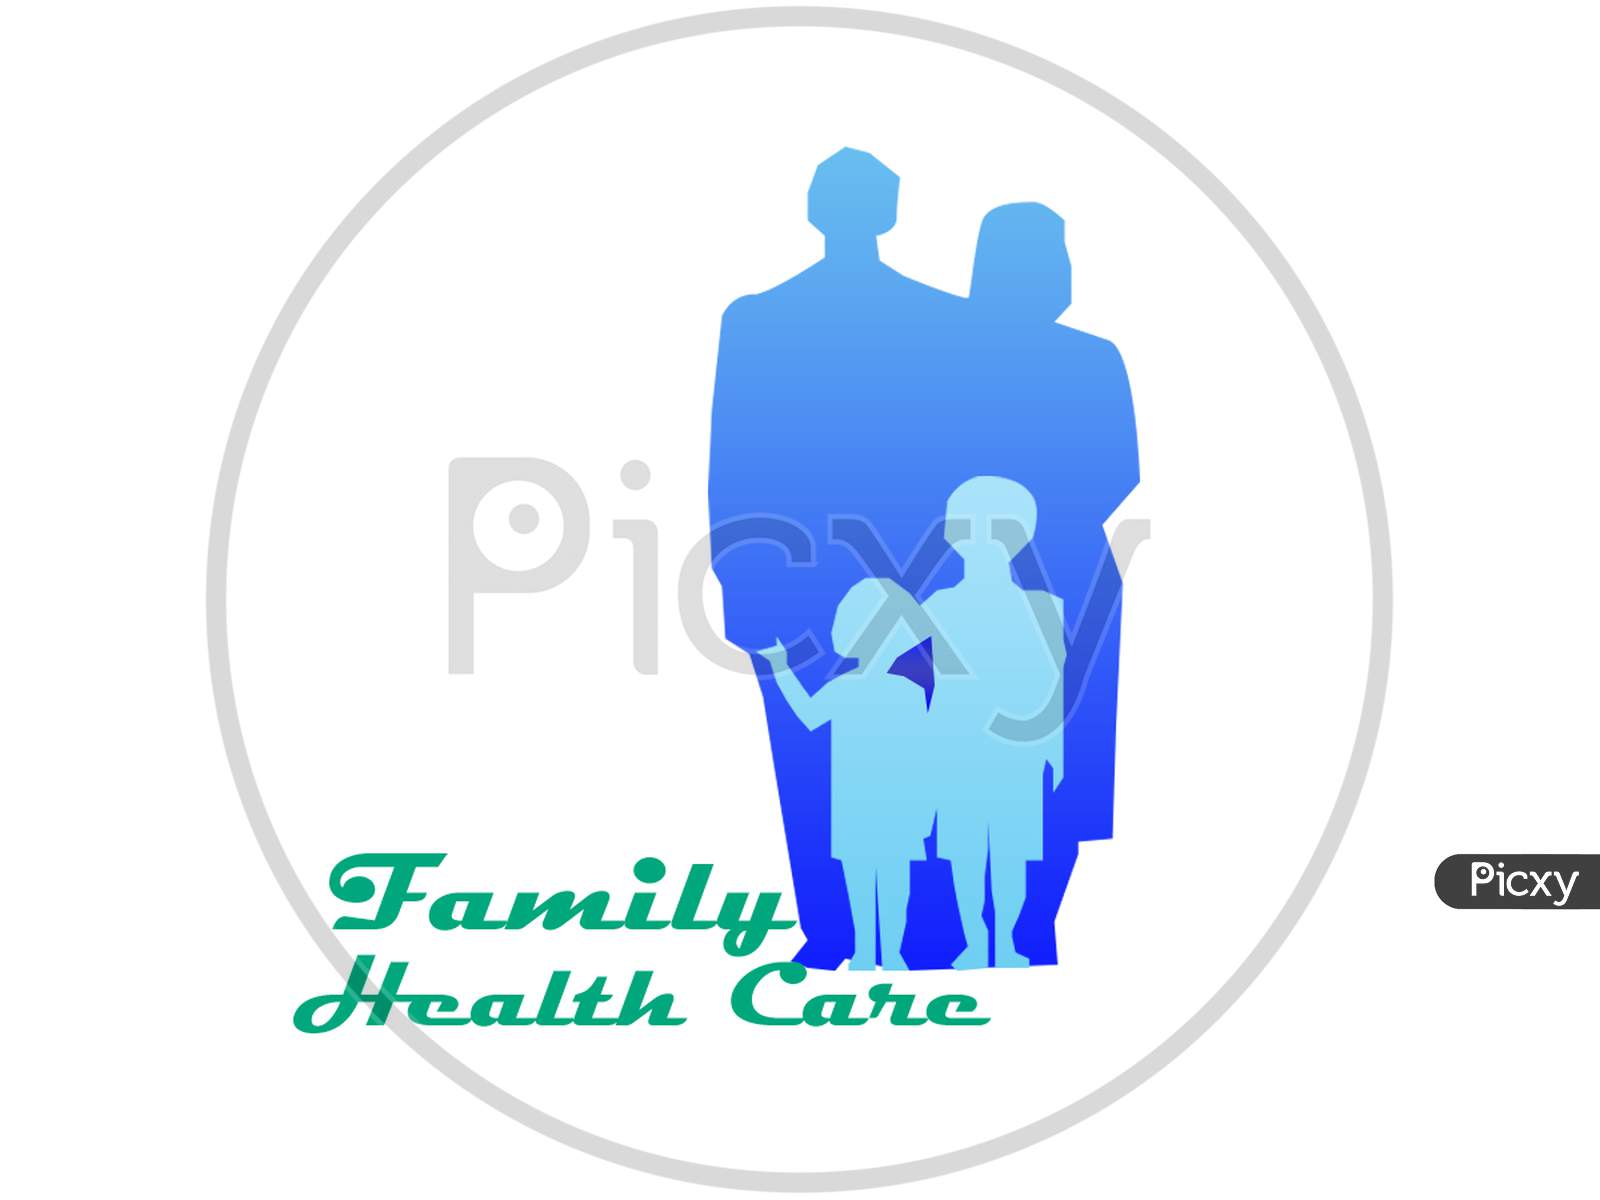 A family heath care logo